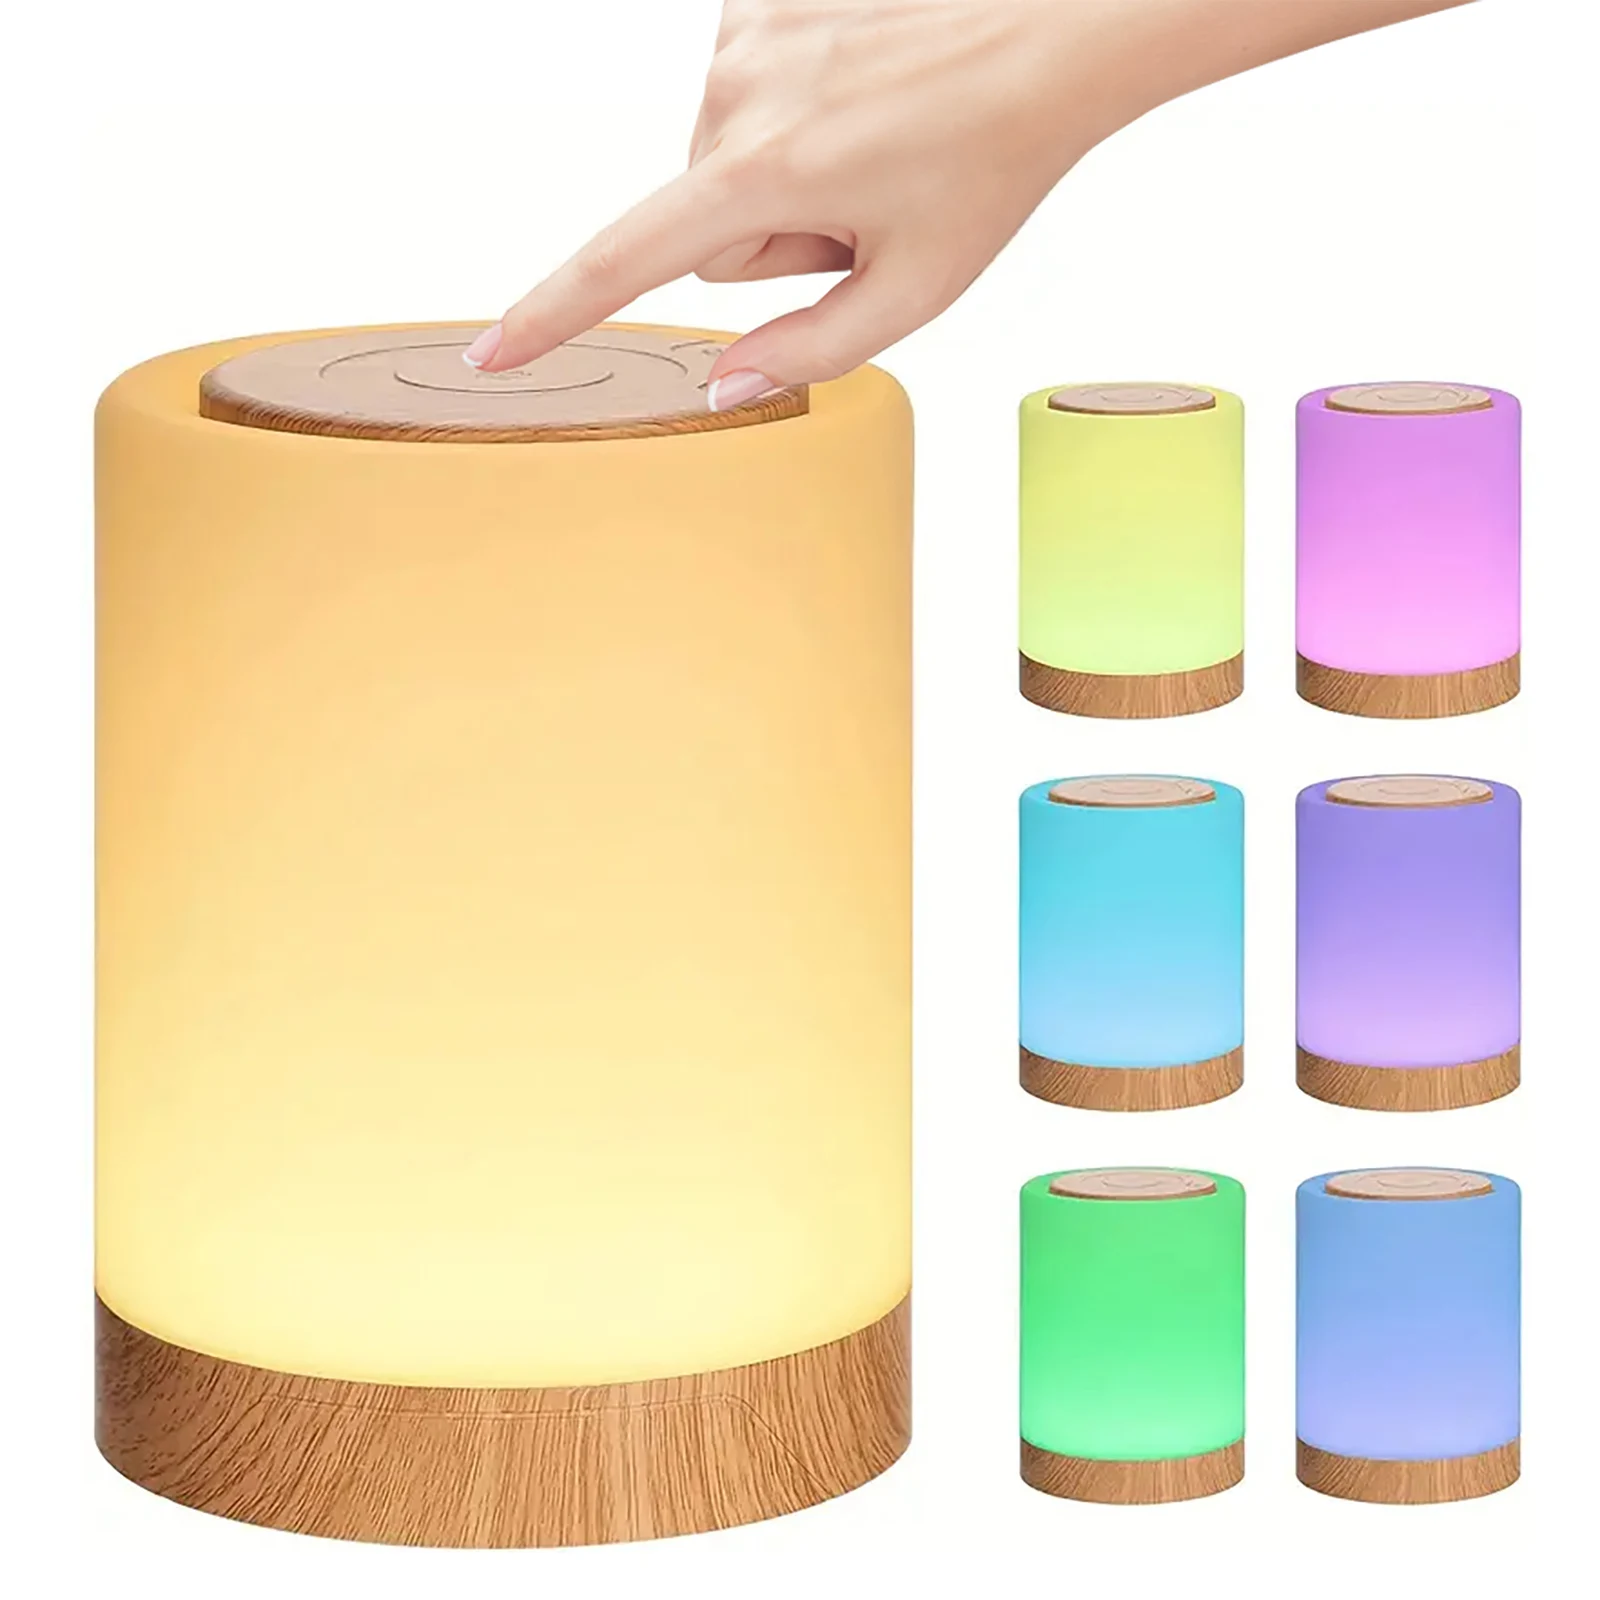 Smart LED Night Light,Portable Bedside Table Lamp,Room decorating items,USB - $19.12